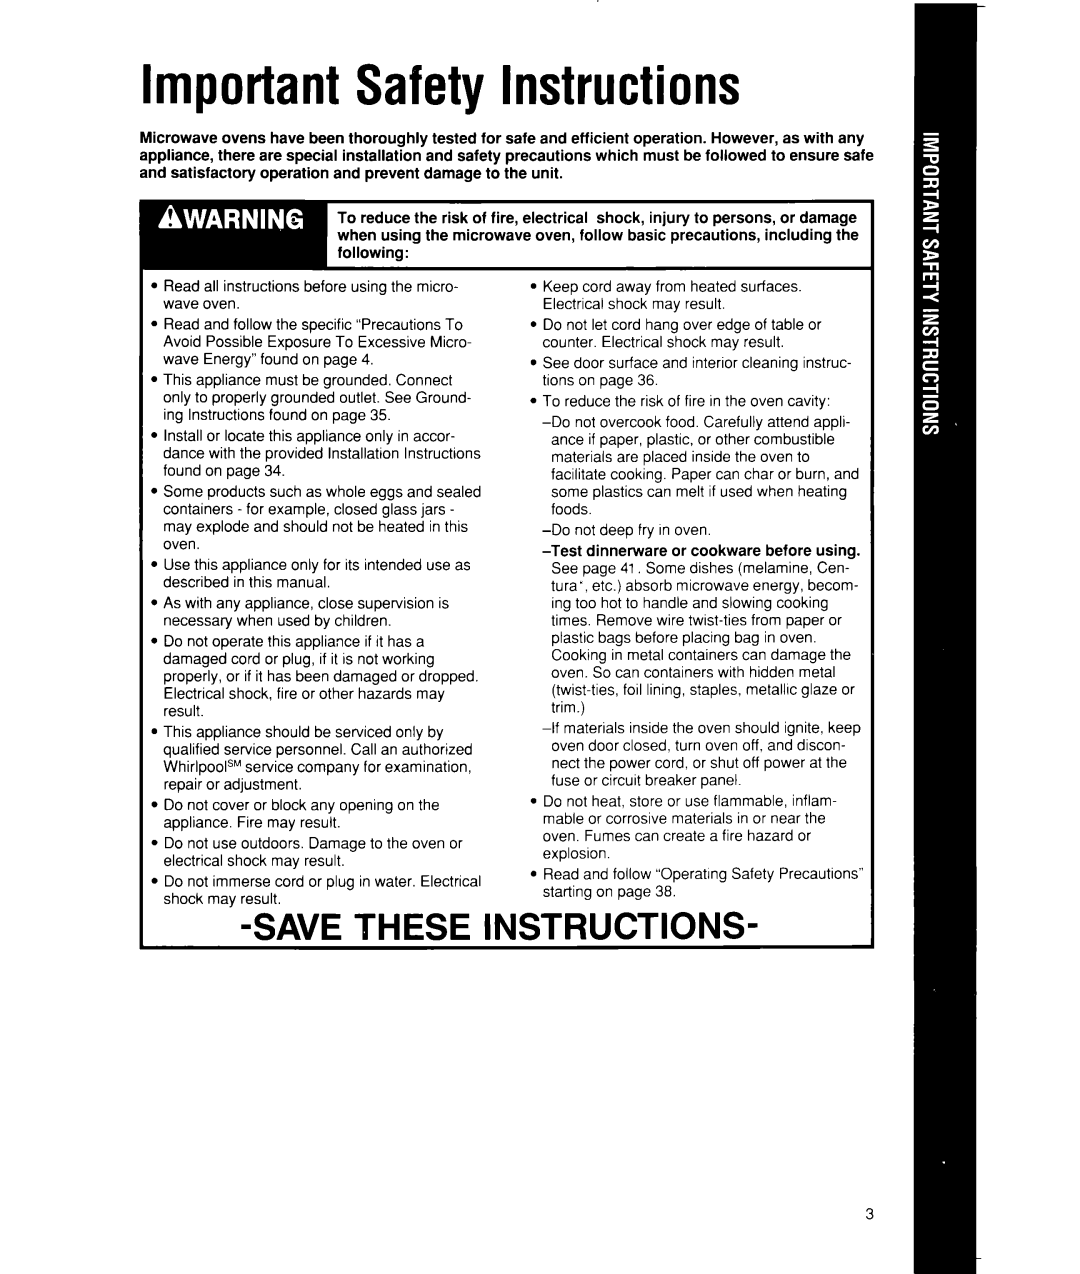 Whirlpool MW7500XW manual ImportantSafetyInstructions, Savethese Instructions 